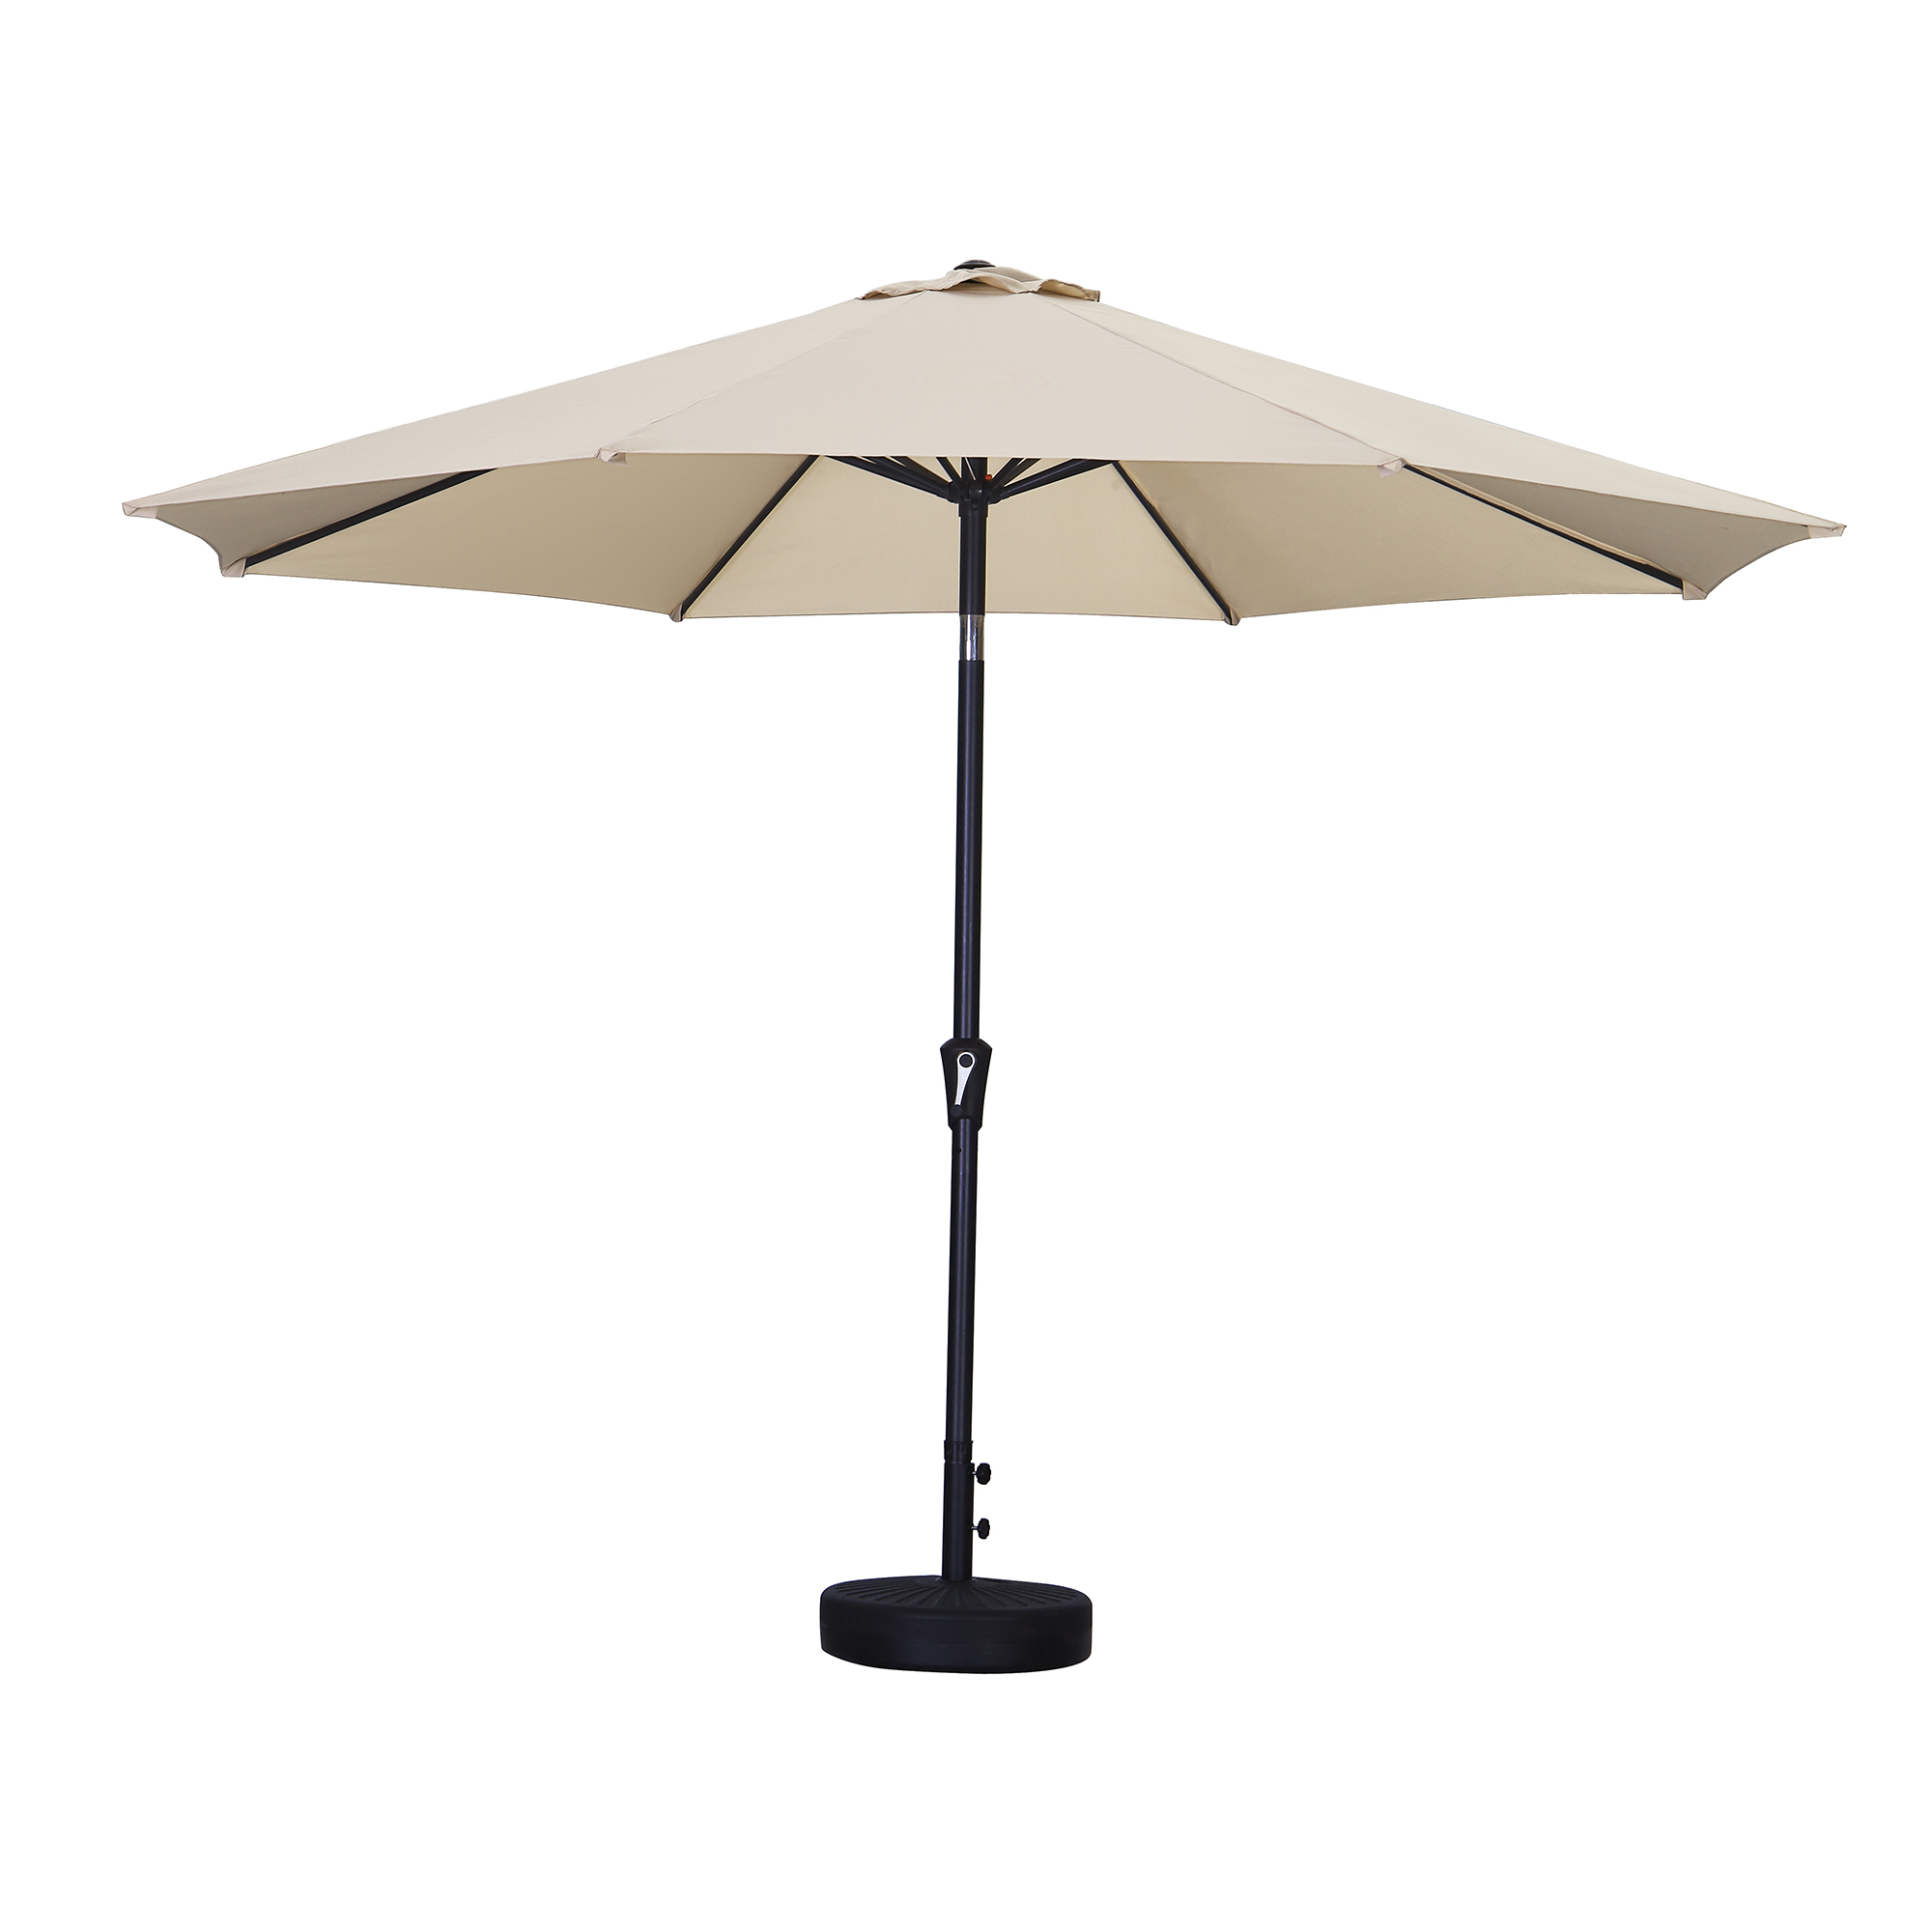 Ainfox 11 FT  Large Market Umbrella Waterproof and Sun Shade 360-Degree Outdoor Umbrella & Patio Umbrella with Tilt and Crank